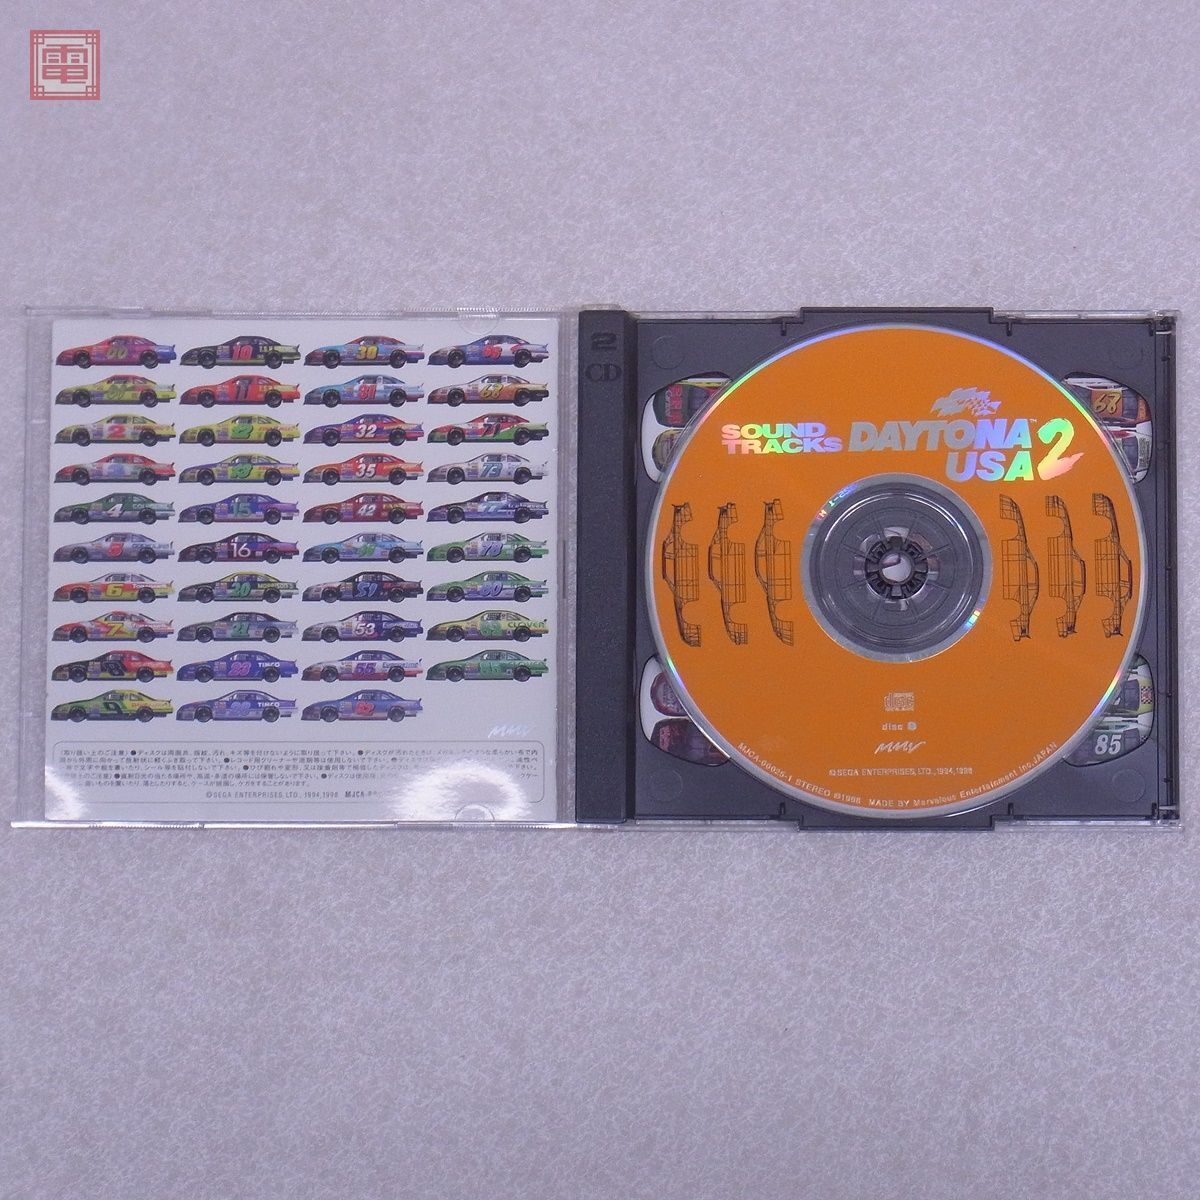  operation guarantee goods CD Daytona USA / 2 soundtrack 3 point set DAYTONA USA circuit edition B-univ etc. Sega SEGA[10